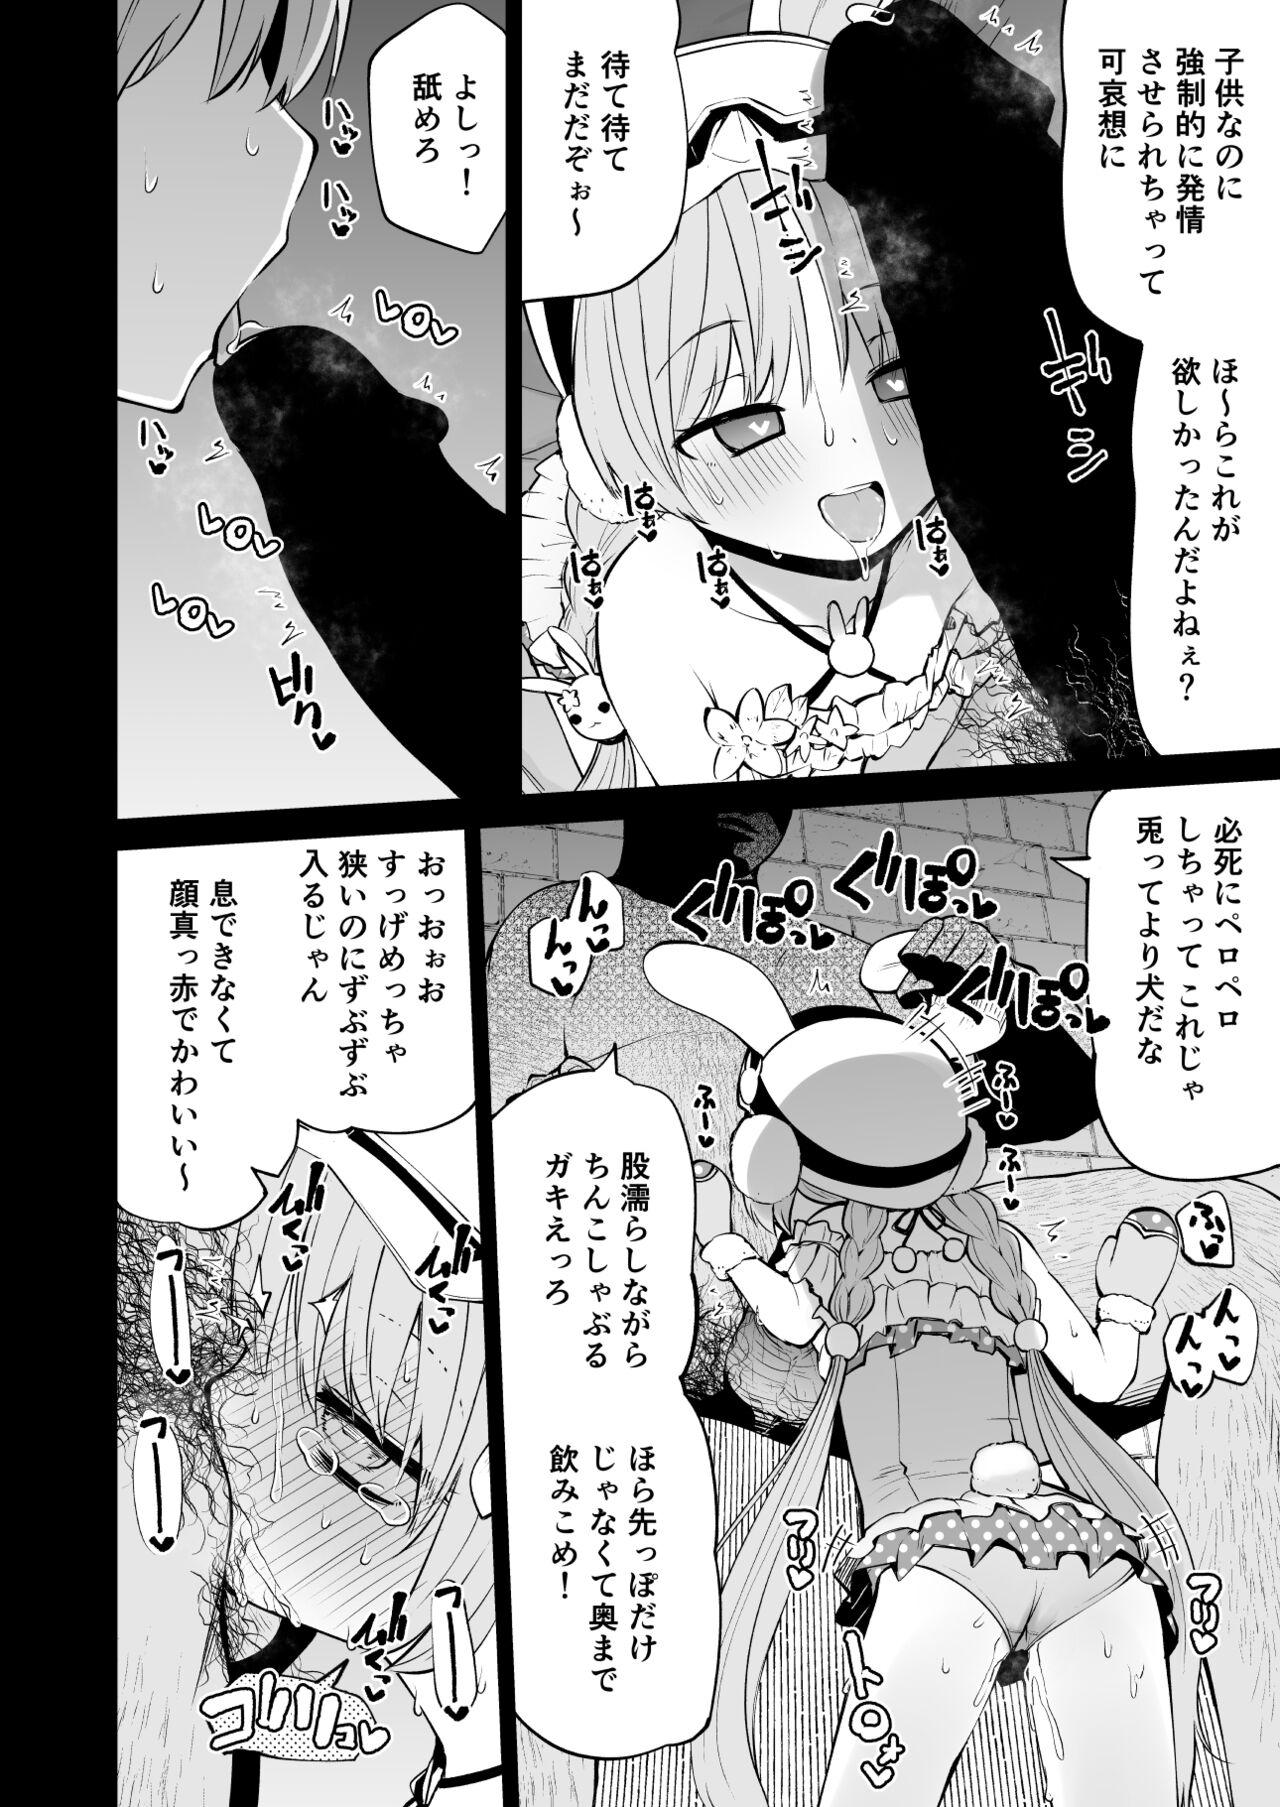 Whooty Koraku 9 - Princess connect Big Dicks - Page 4